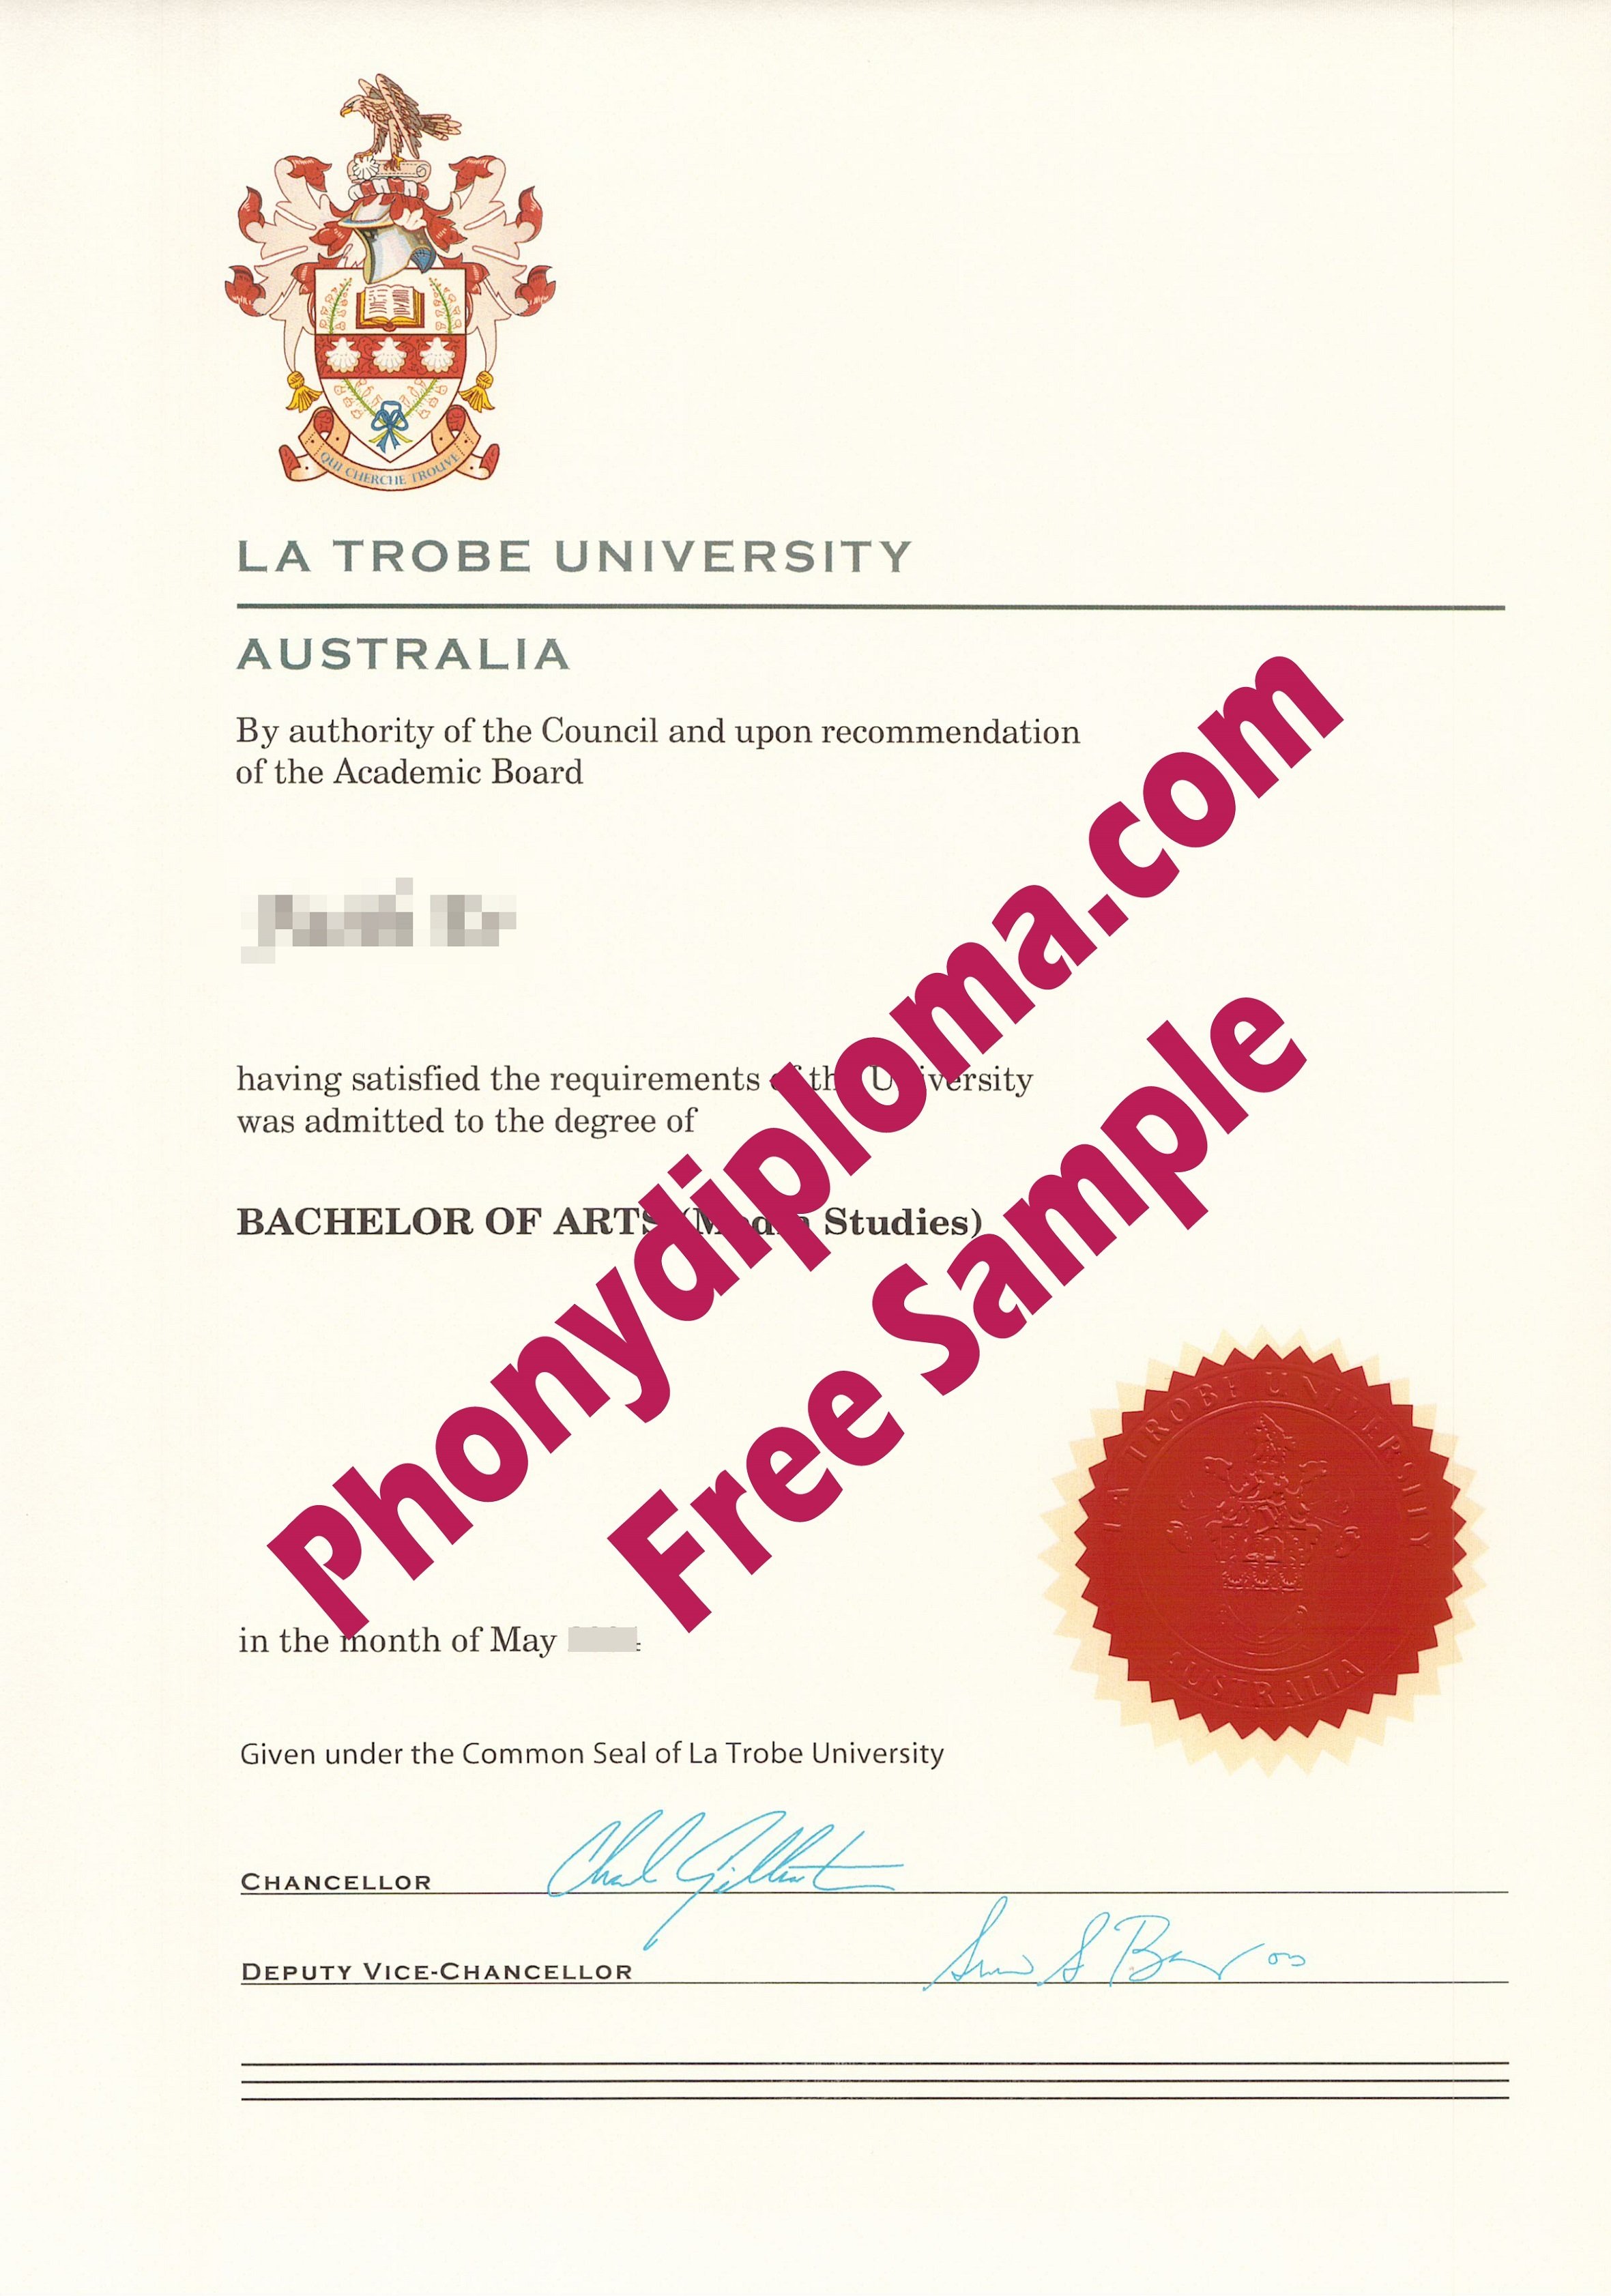 La Trobe Latrobe University Free Sample From Phonydiploma